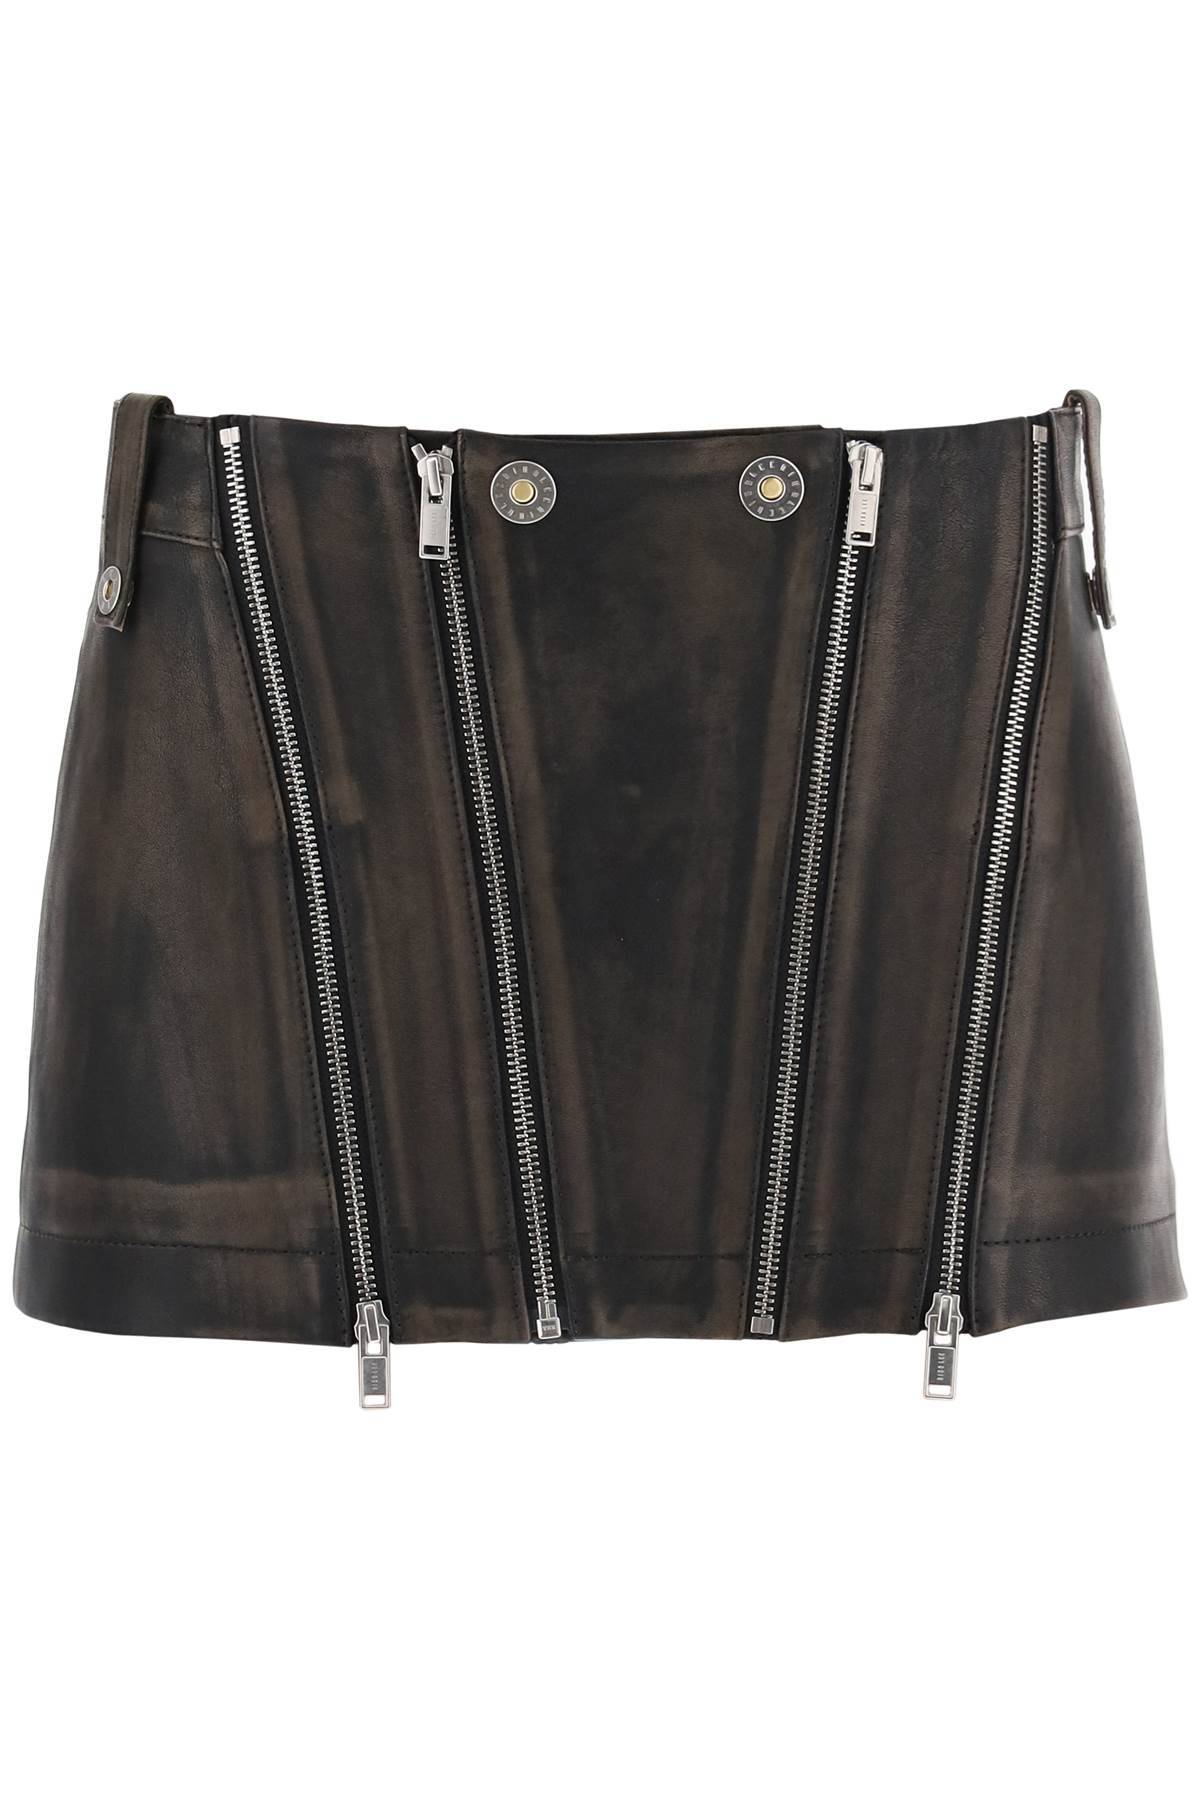 Dion Lee DION LEE leather biker micro skirt